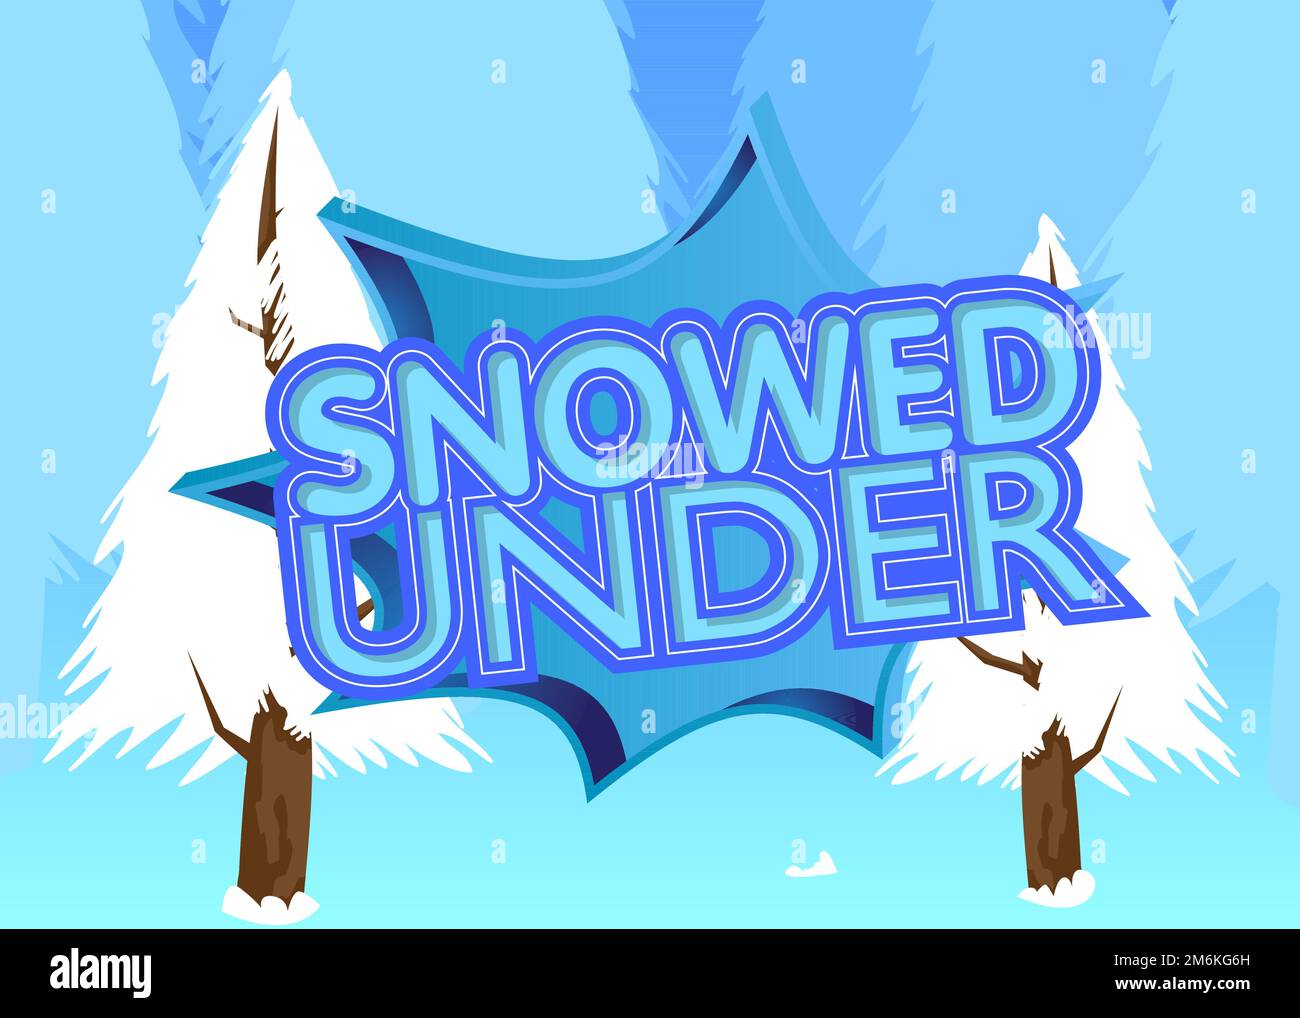 Pine Tree with Snowed Under text. Winter event vector cartoon illustration. Stock Vector